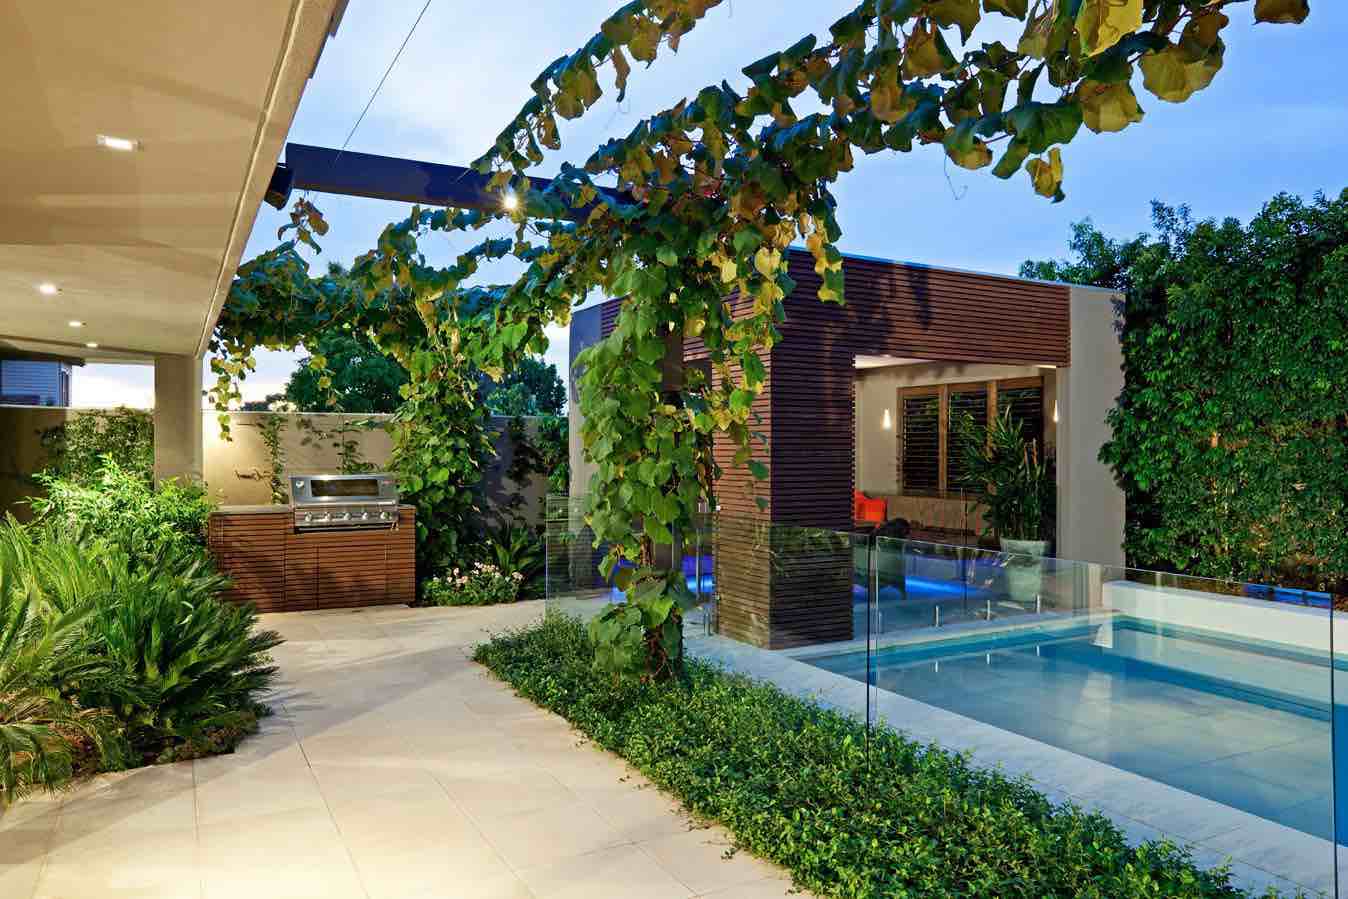 41 Backyard Design Ideas For Small Yards | Worthminer